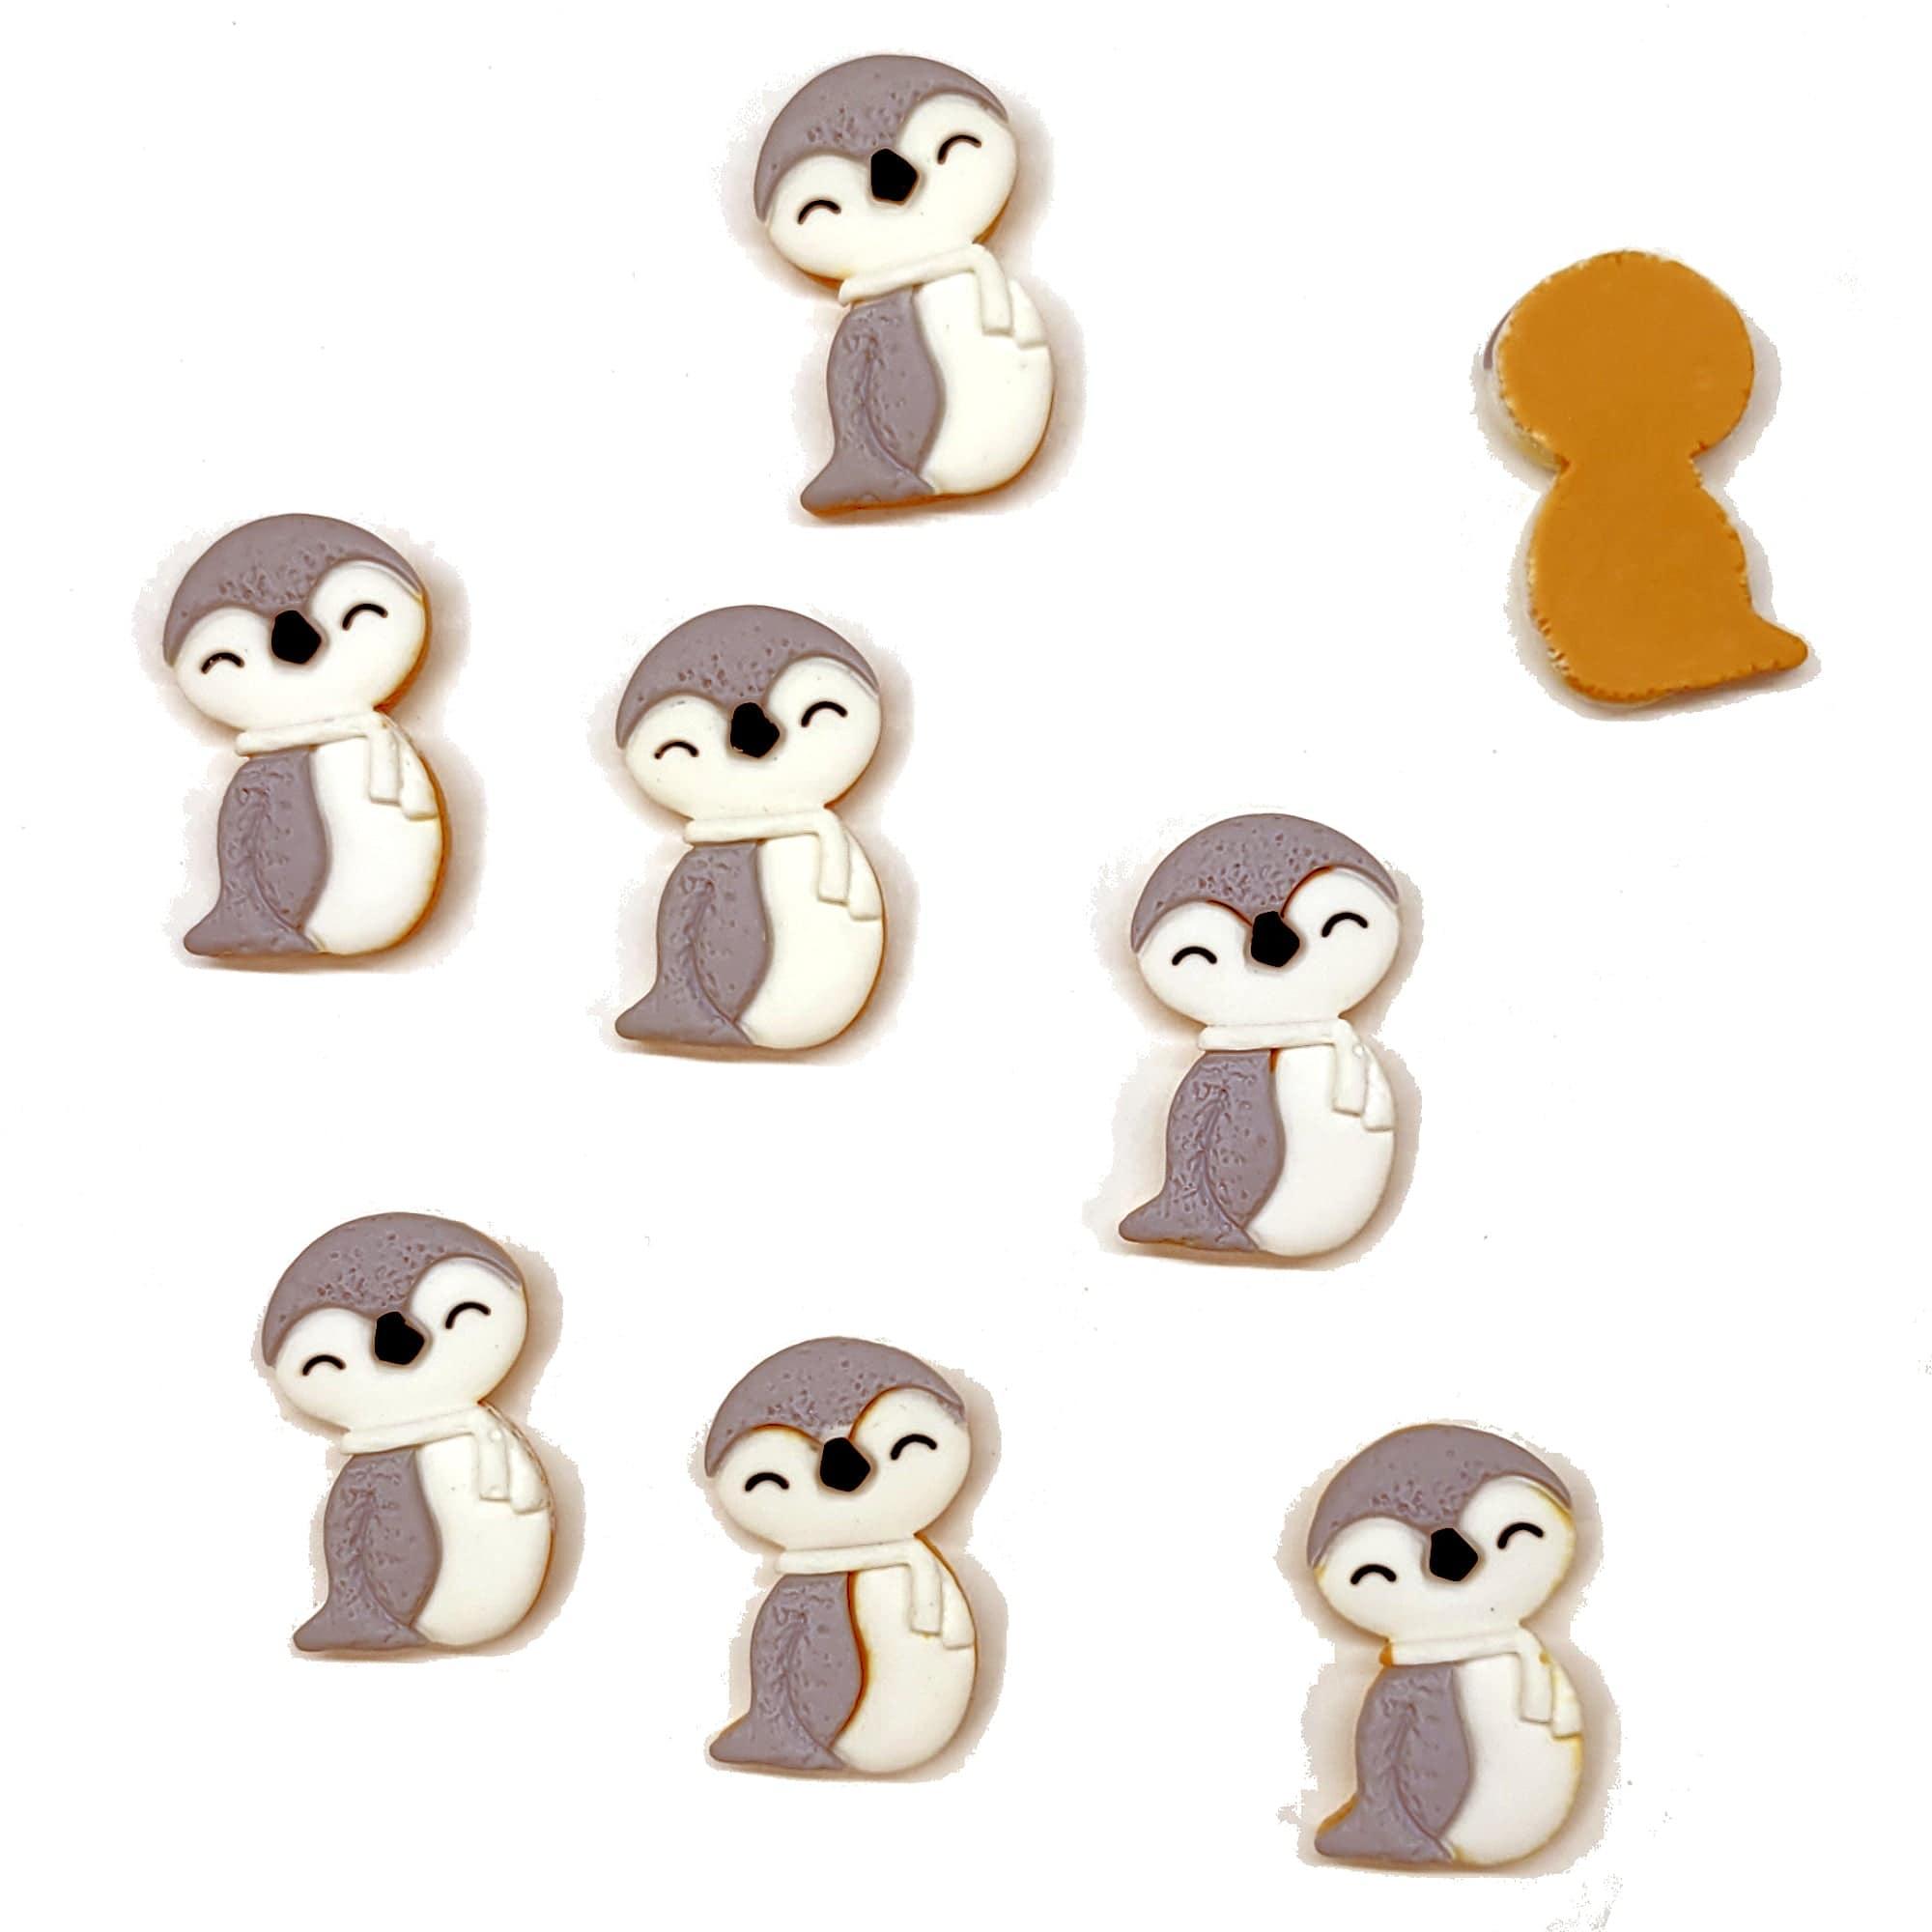 Winter Penguin Collection Playful Penguins Flatback Scrapbook Buttons by SSC Designs - 8 Pieces